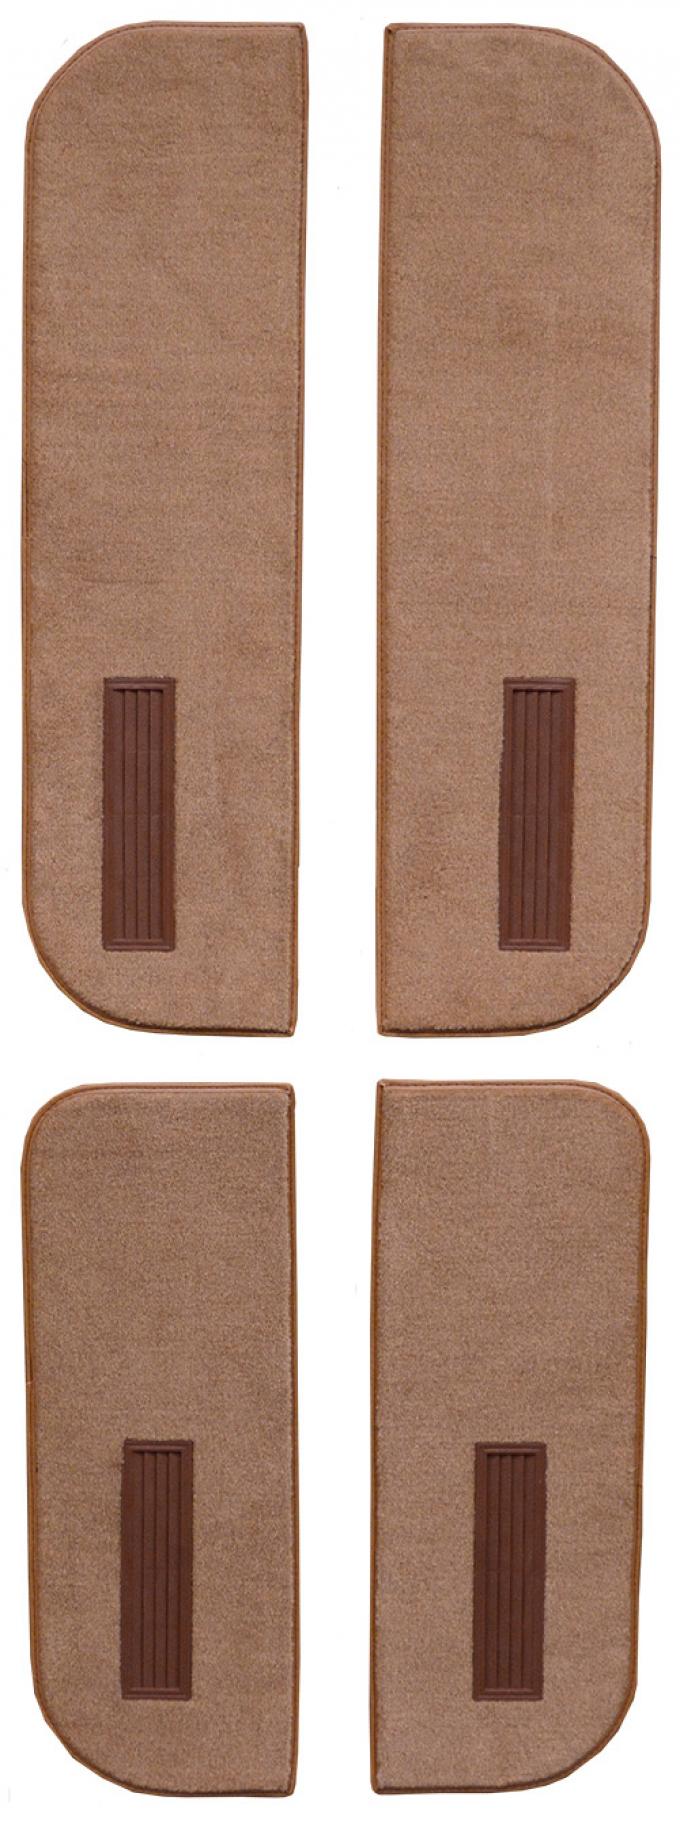 ACC 1987-1988 GMC V2500 Suburban Door Panel Inserts on Cardboard w/Vents 4pc Cutpile Carpet